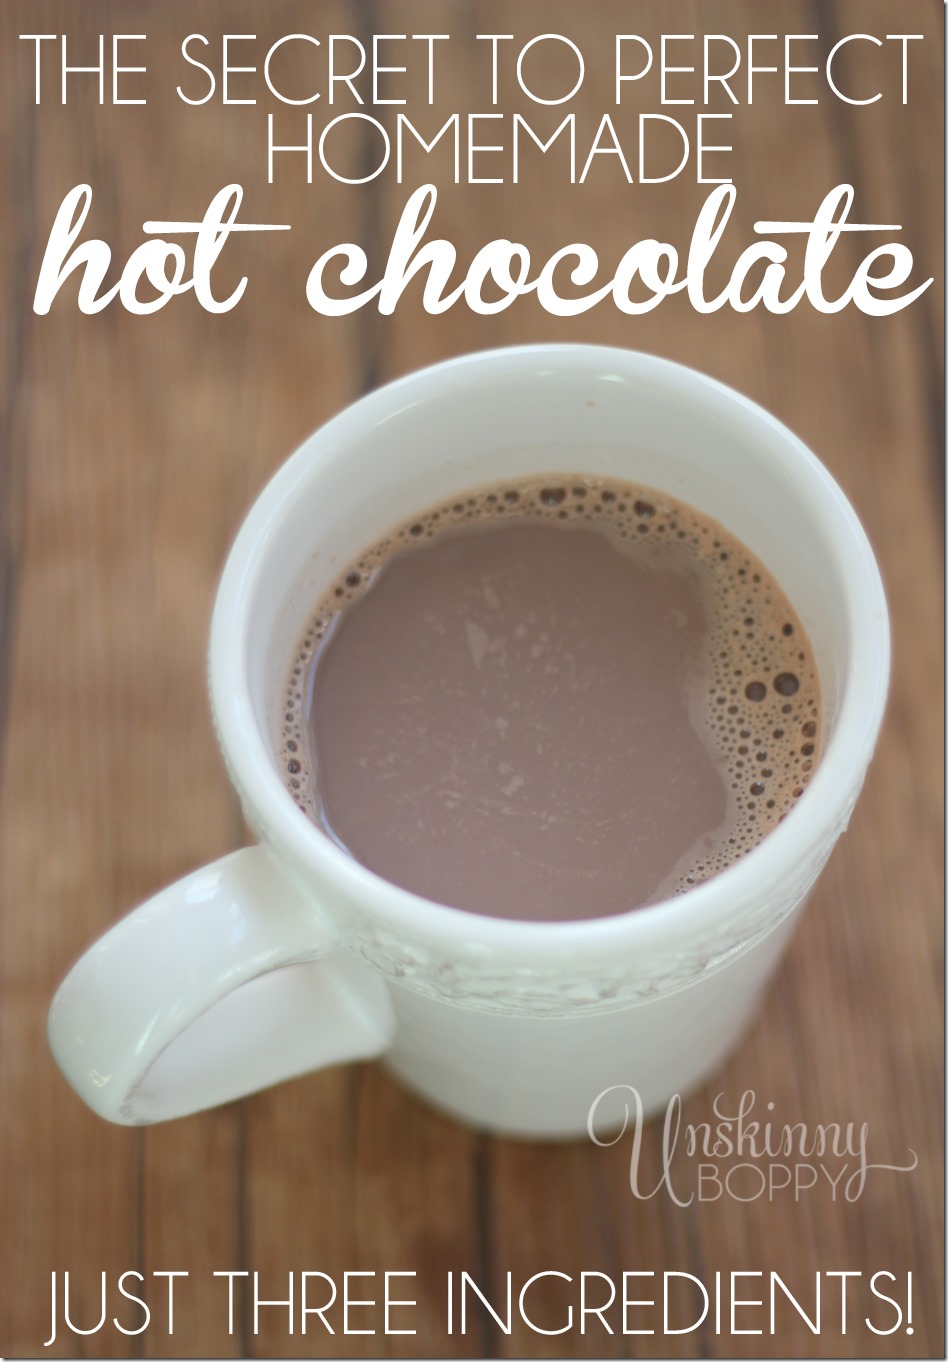 How to make the Best Homemade Hot Chocolate recipe